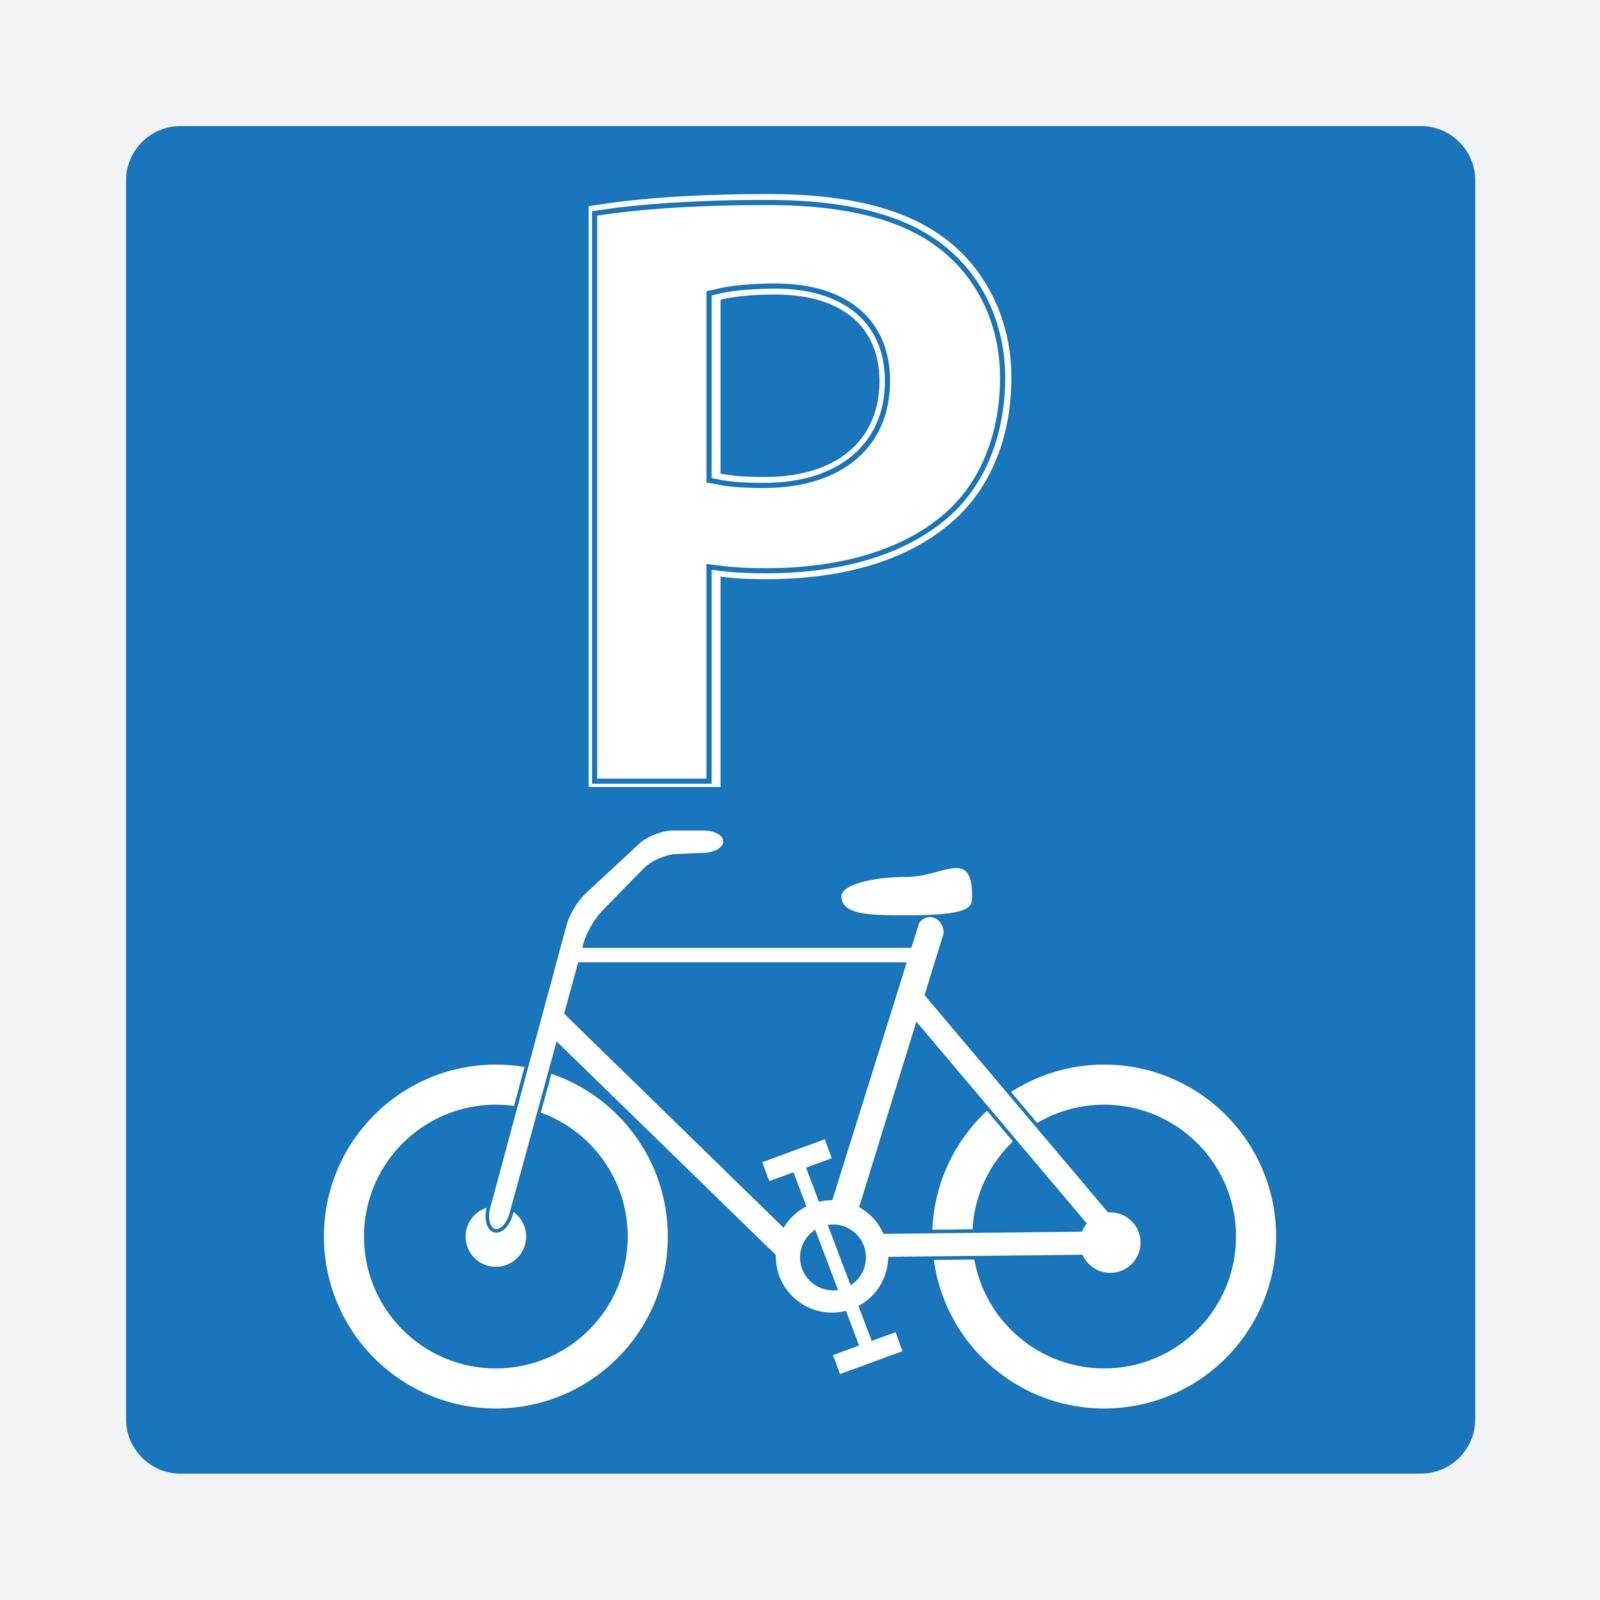 Bicycle parking sign illustration